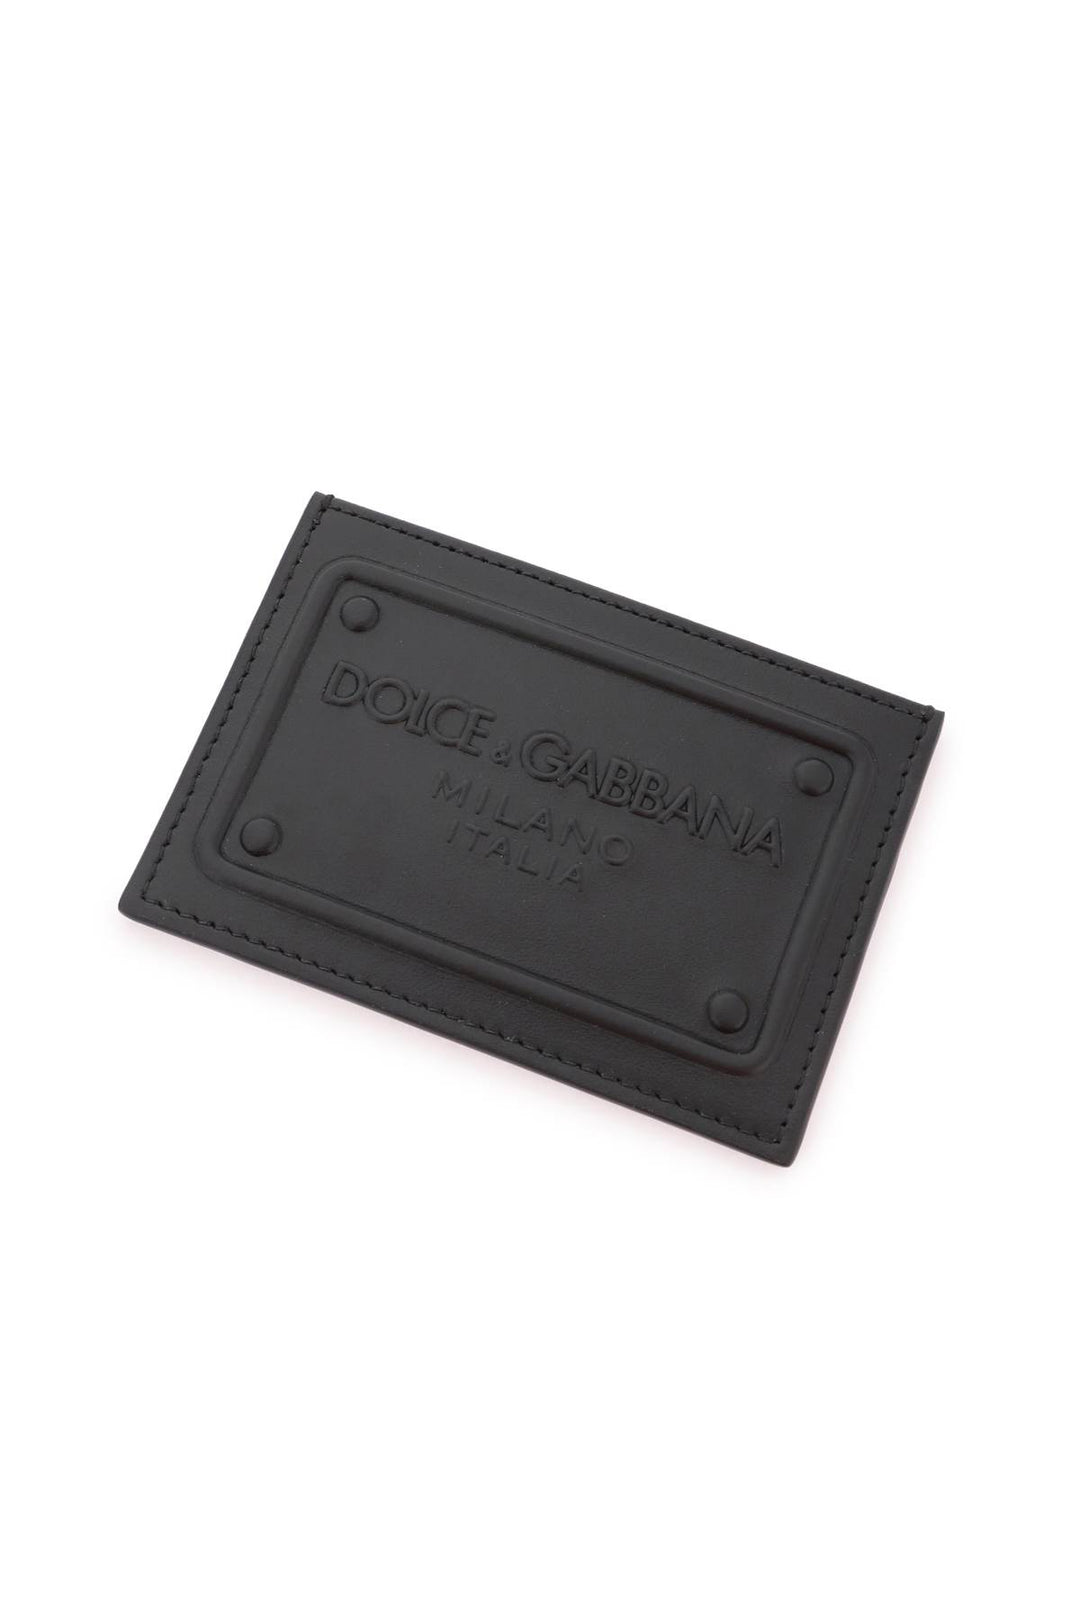 Dolce & Gabbana Embossed Logo Leather Cardholder   Nero